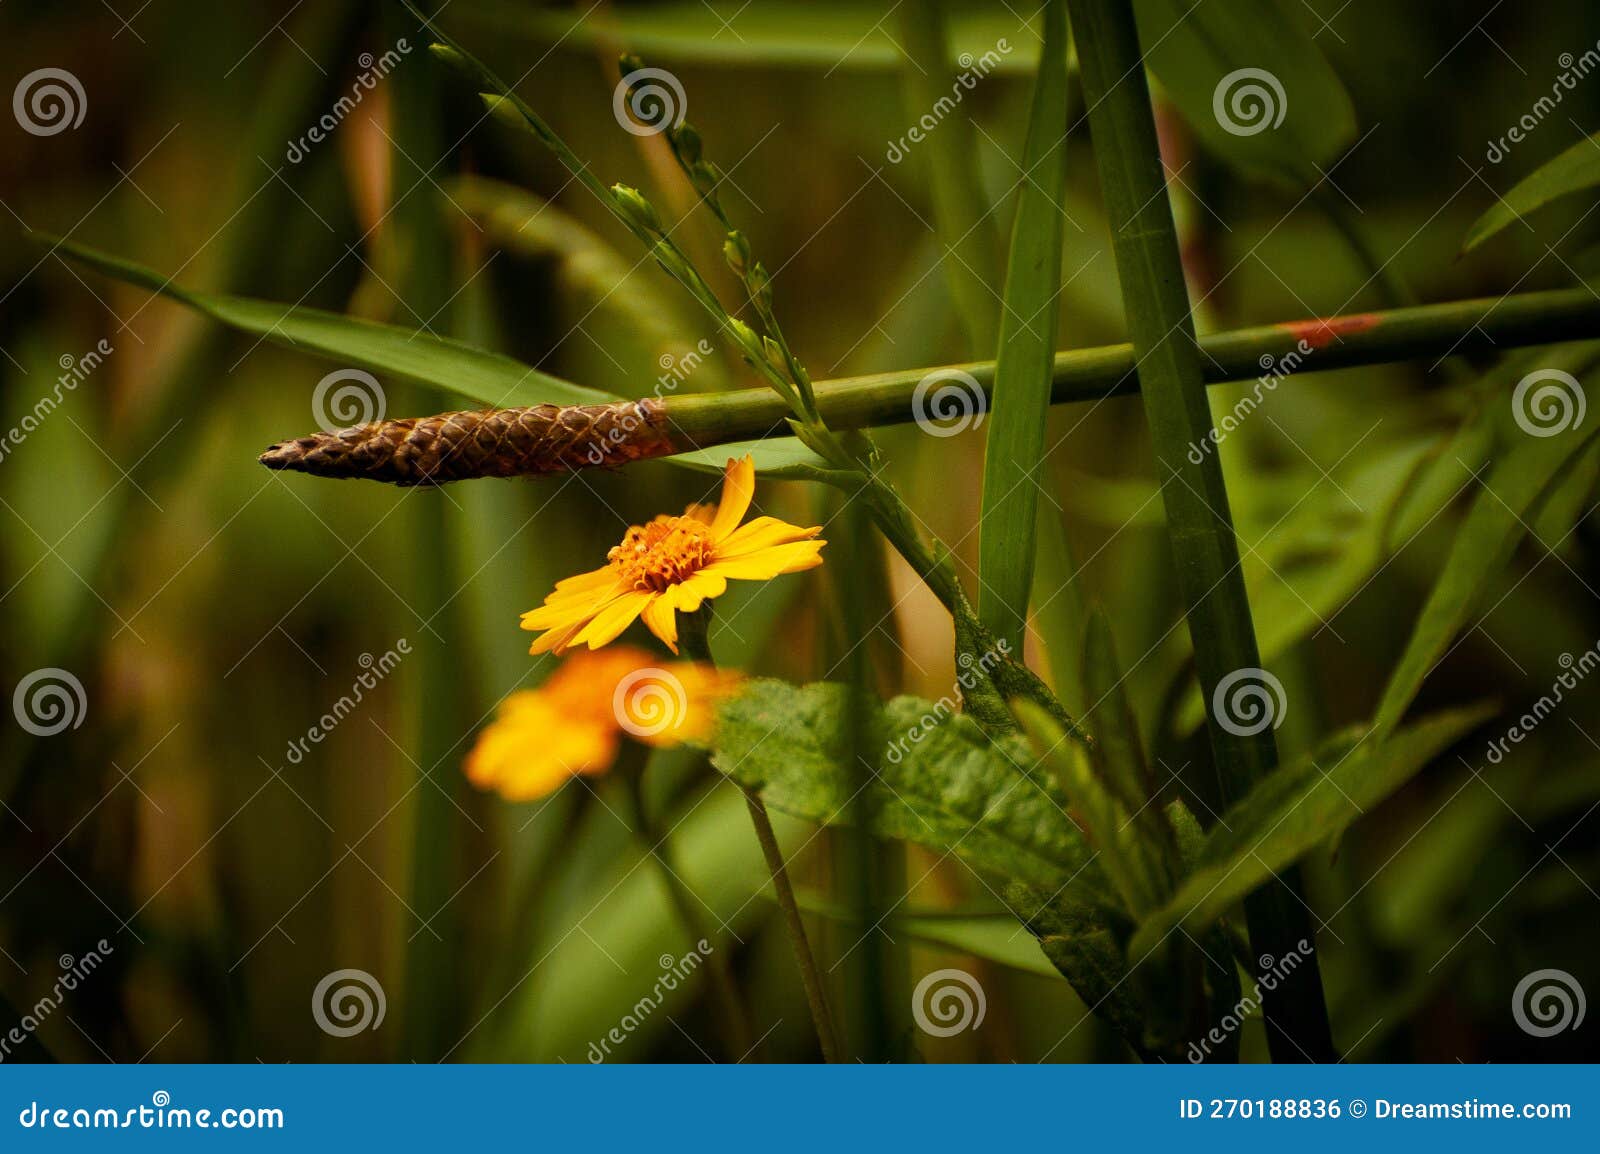 litle yellow flower 2